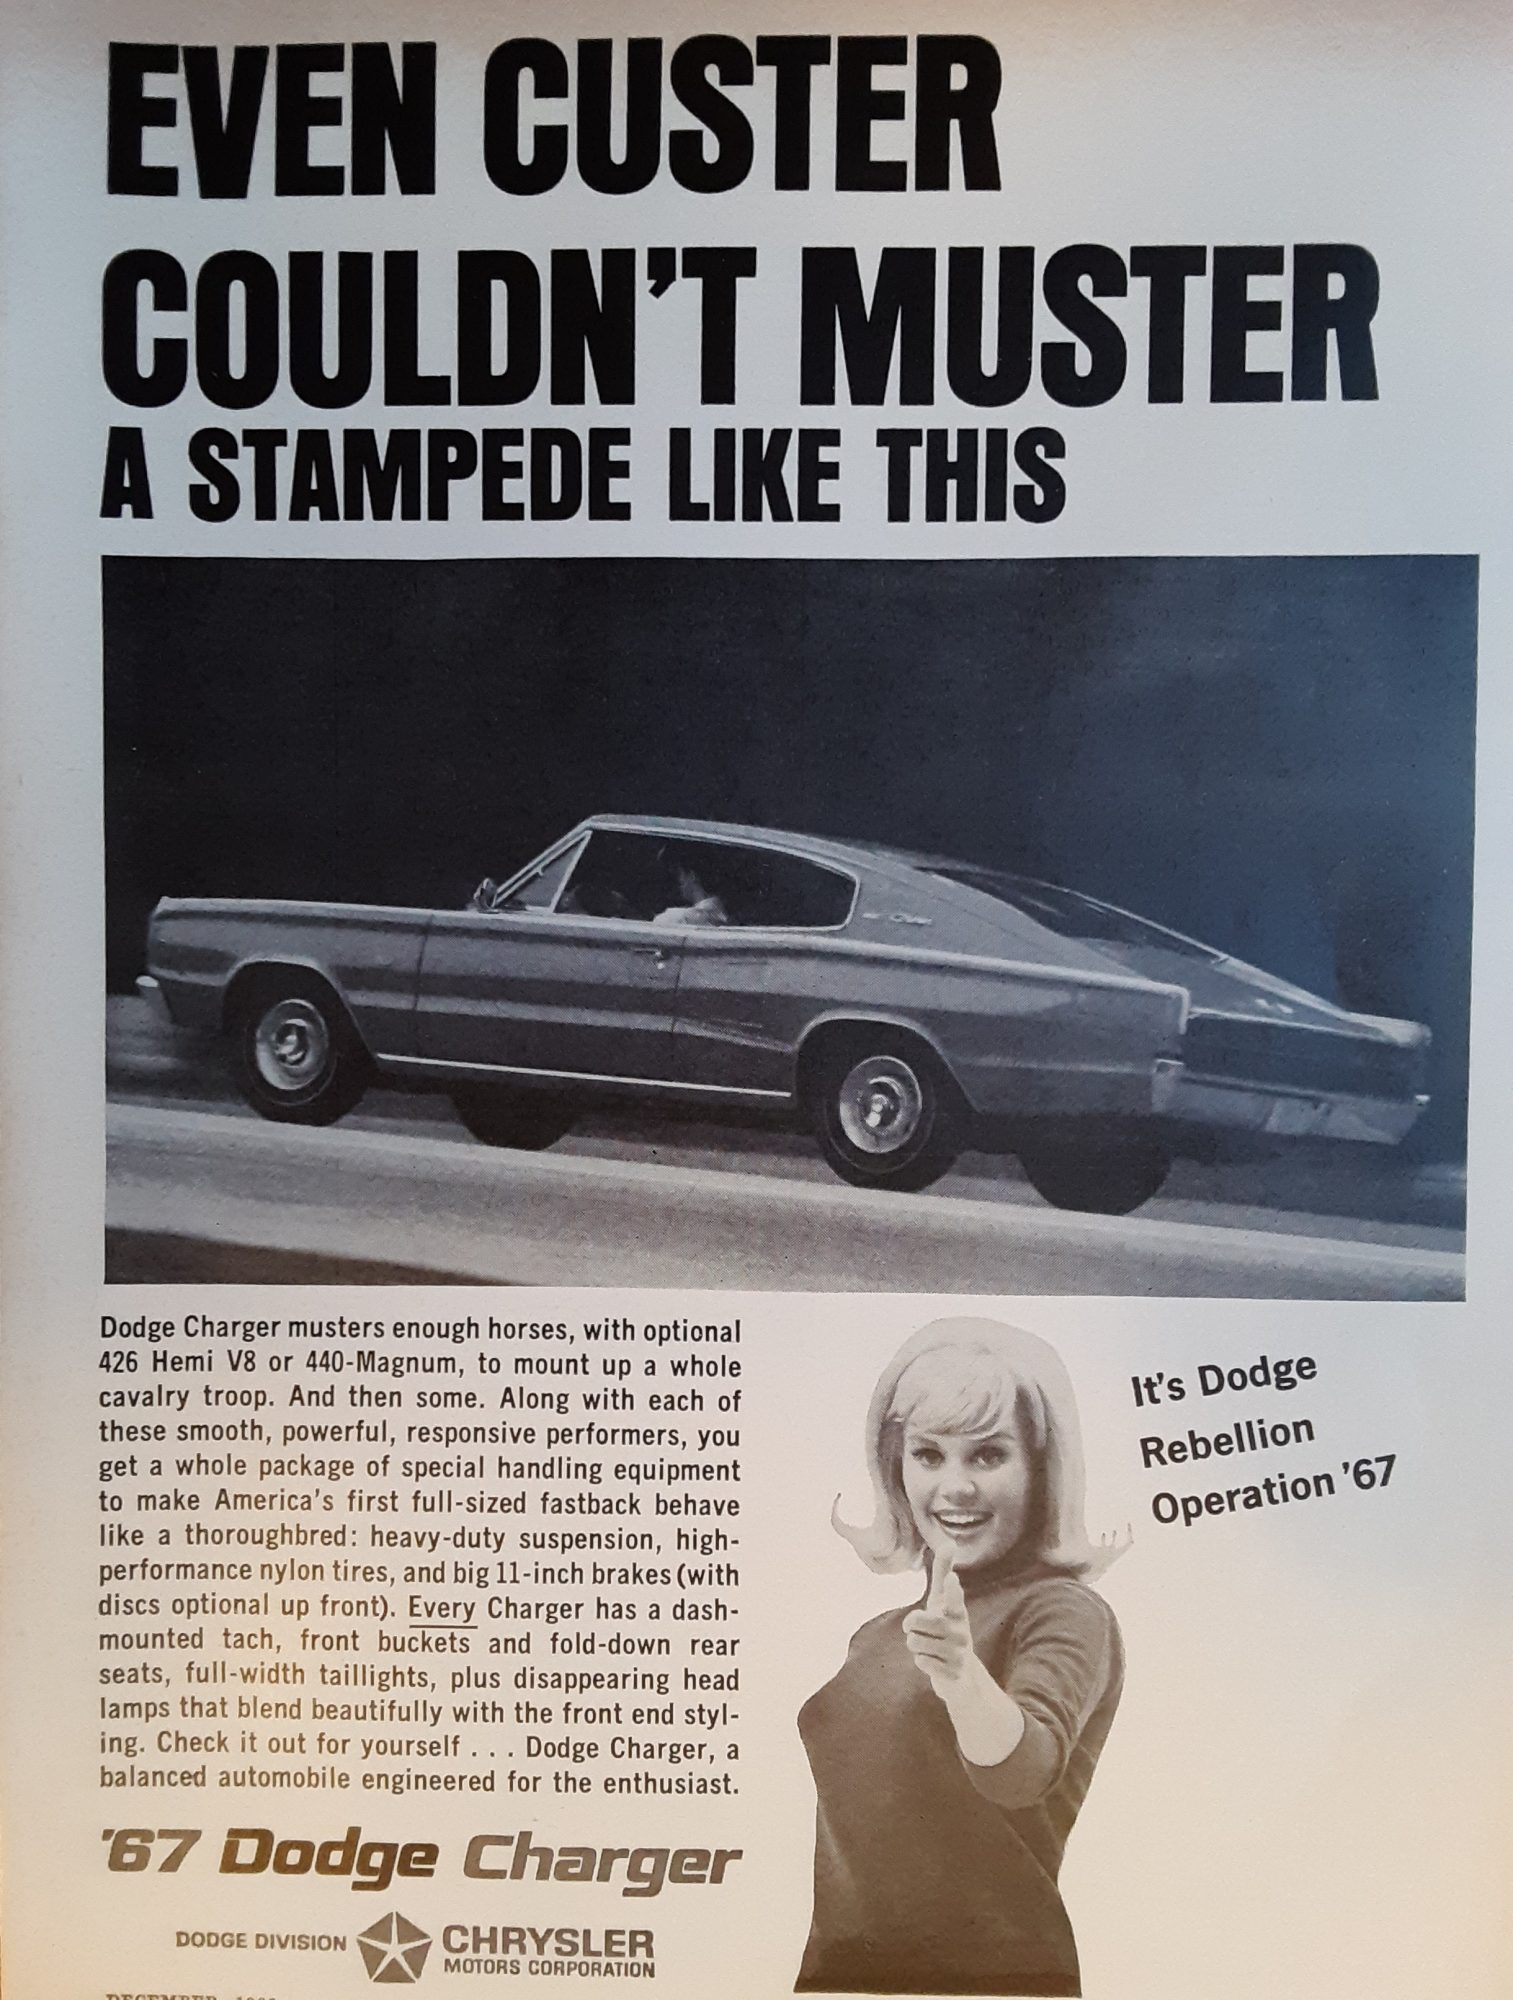 Vintage Dodge advertisement